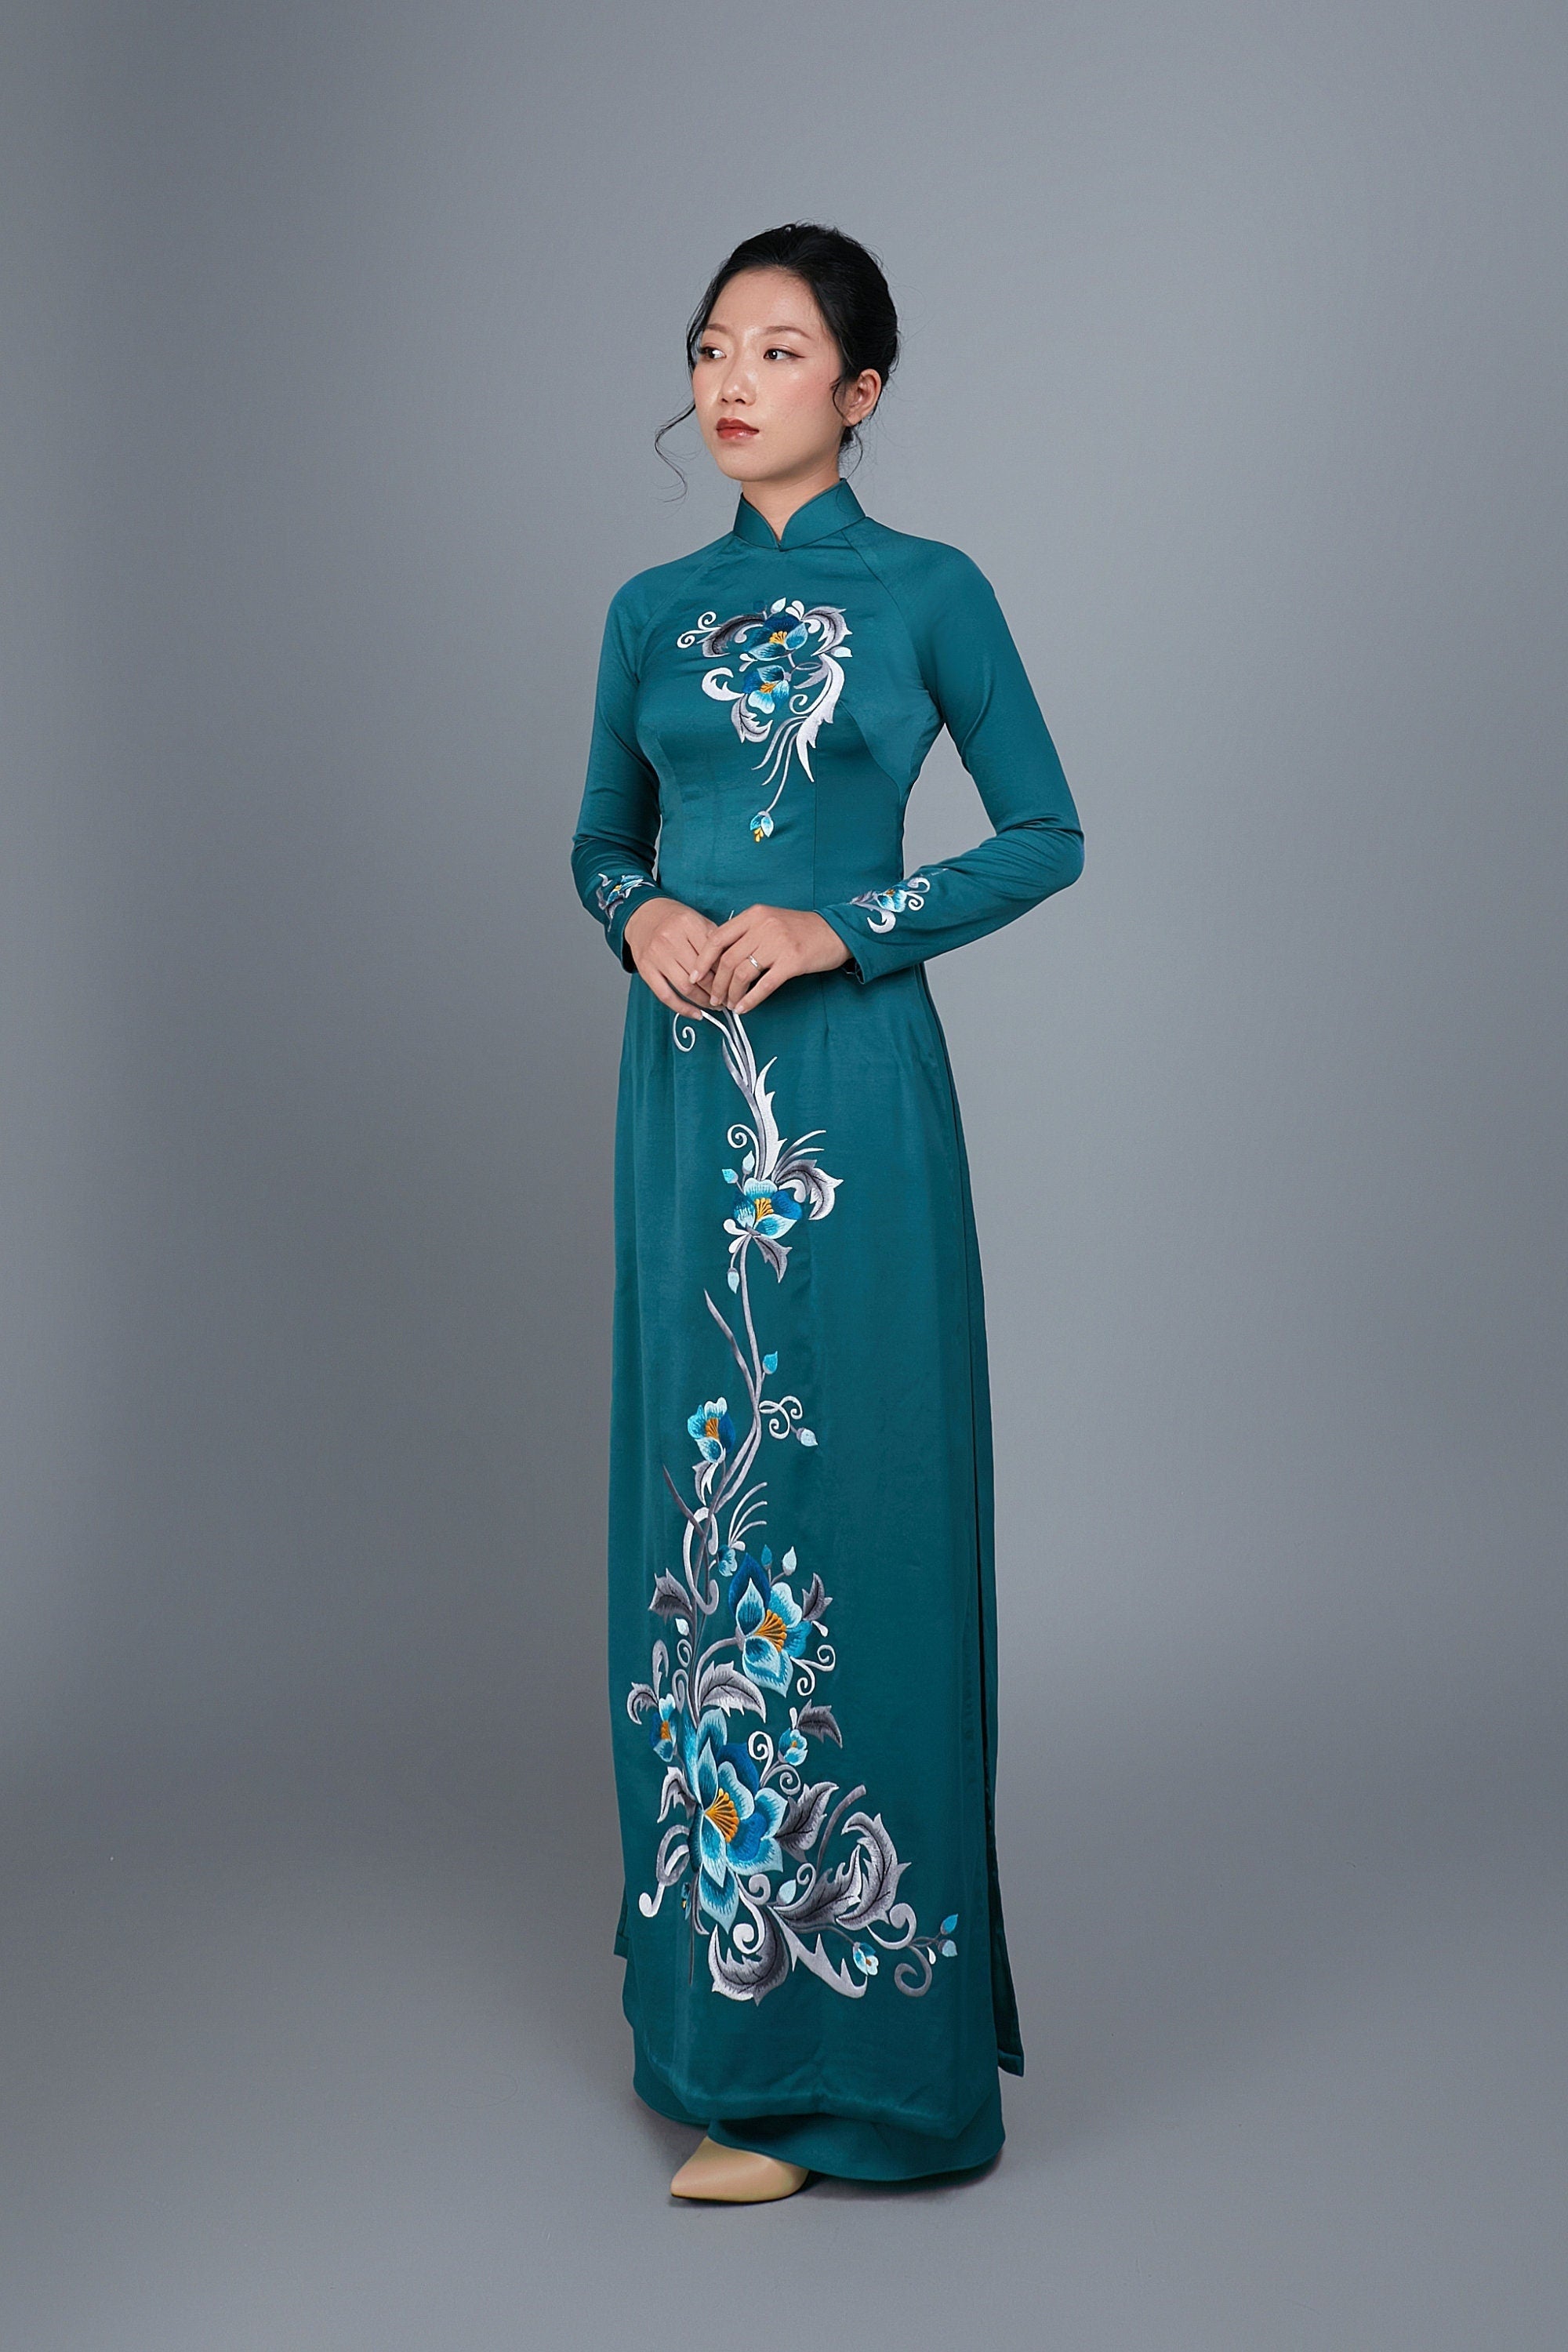 Ao Dai - Vietnamese traditional Dress - Hanoi Etrip